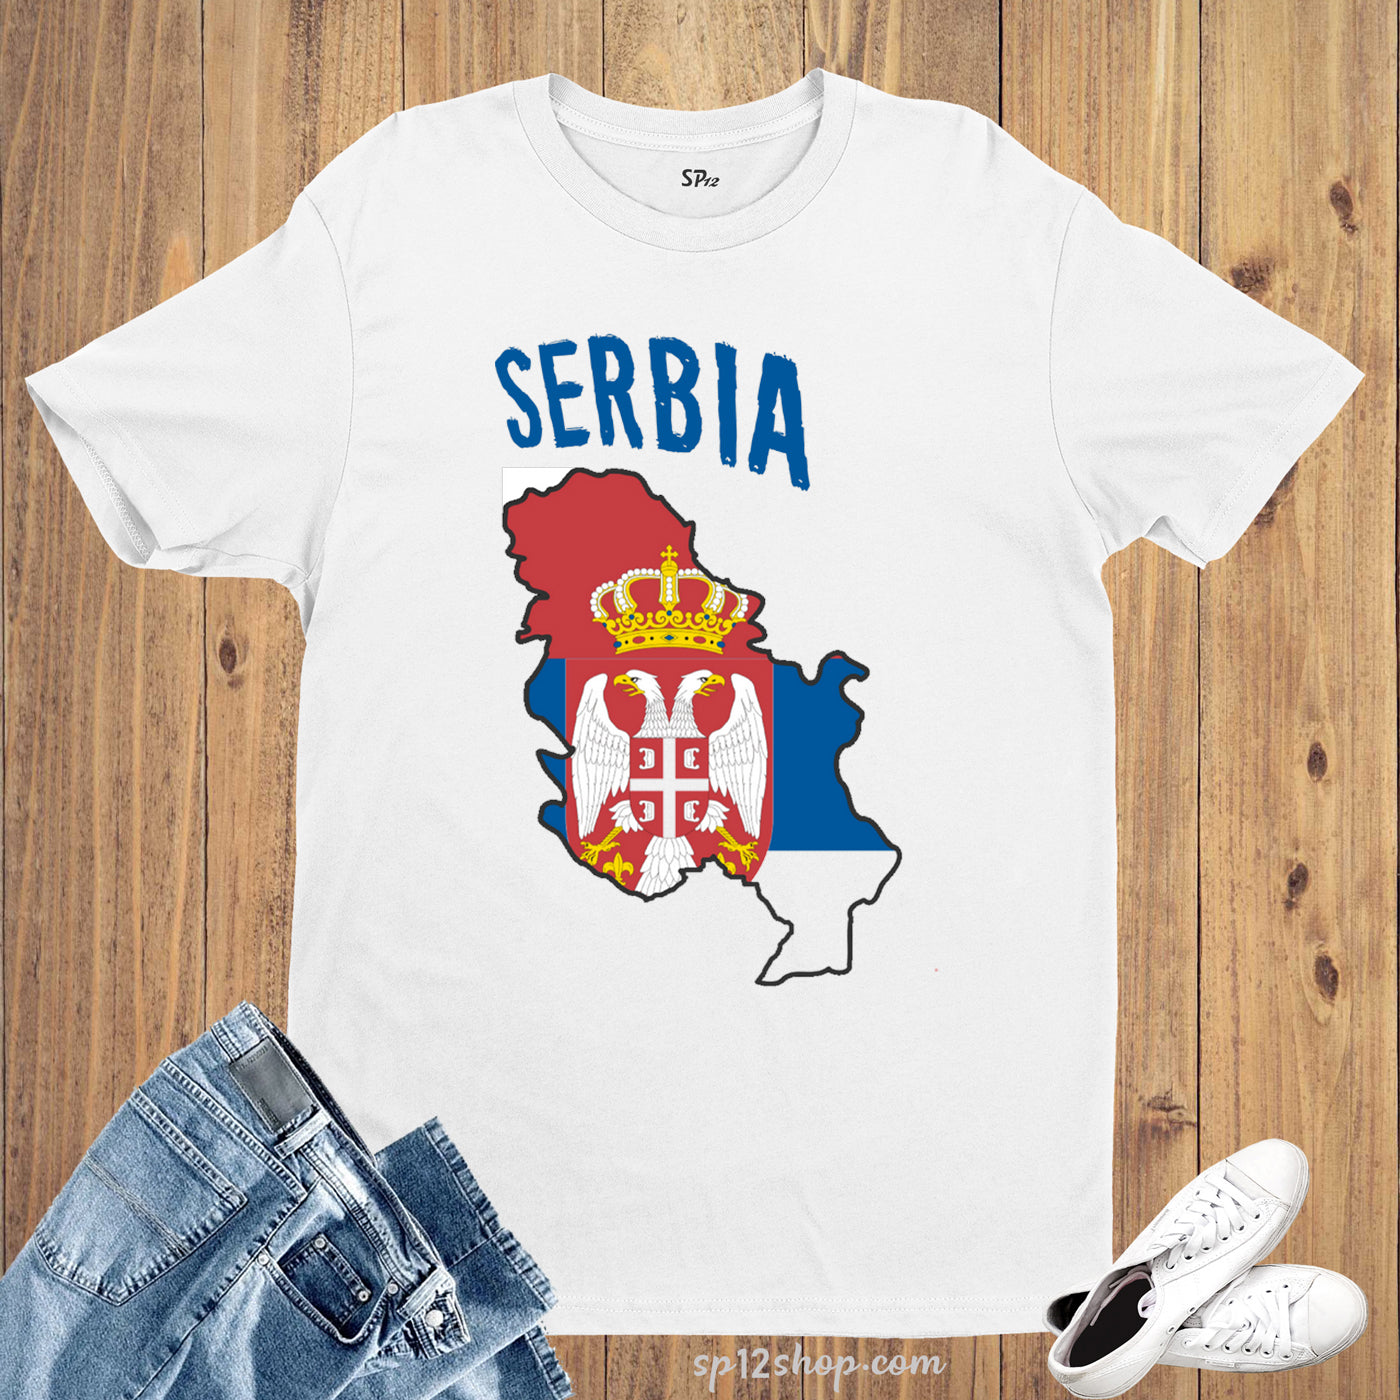 Serbia Flag T Shirt Flag T Shirt Olympics FIFA World Cup Country Flag Tee Shirt